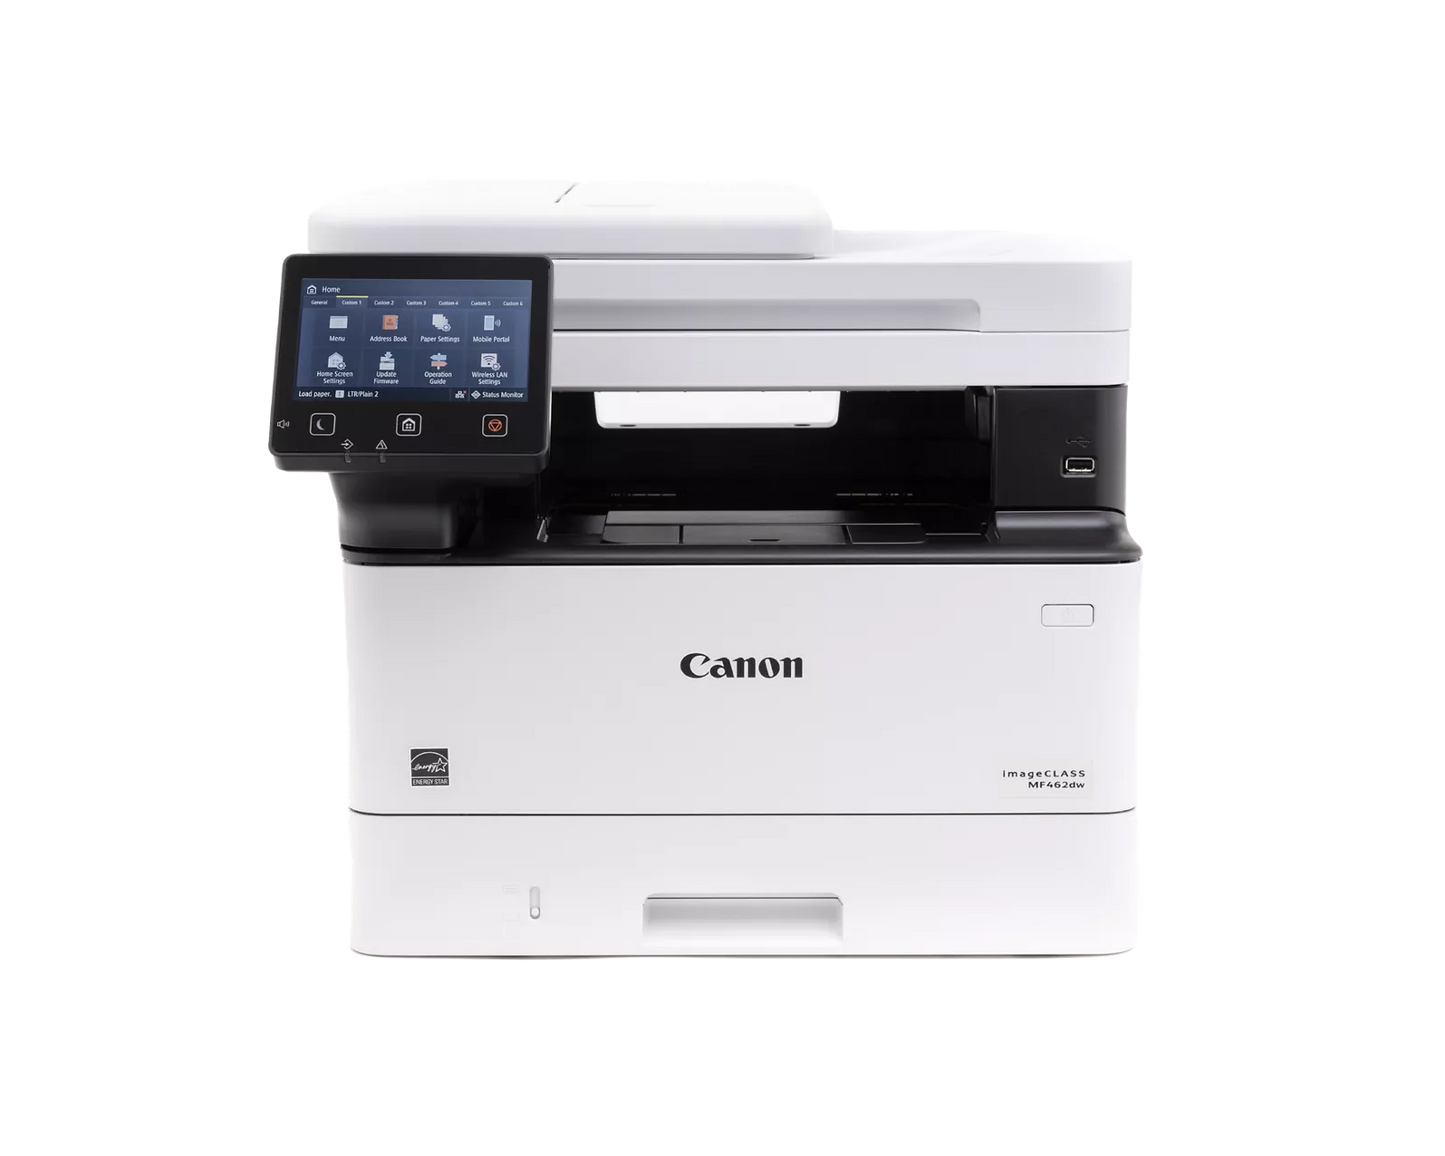 Canon imageCLASS MF462dw - All-in-One, Wireless, Duplex Laser Printer